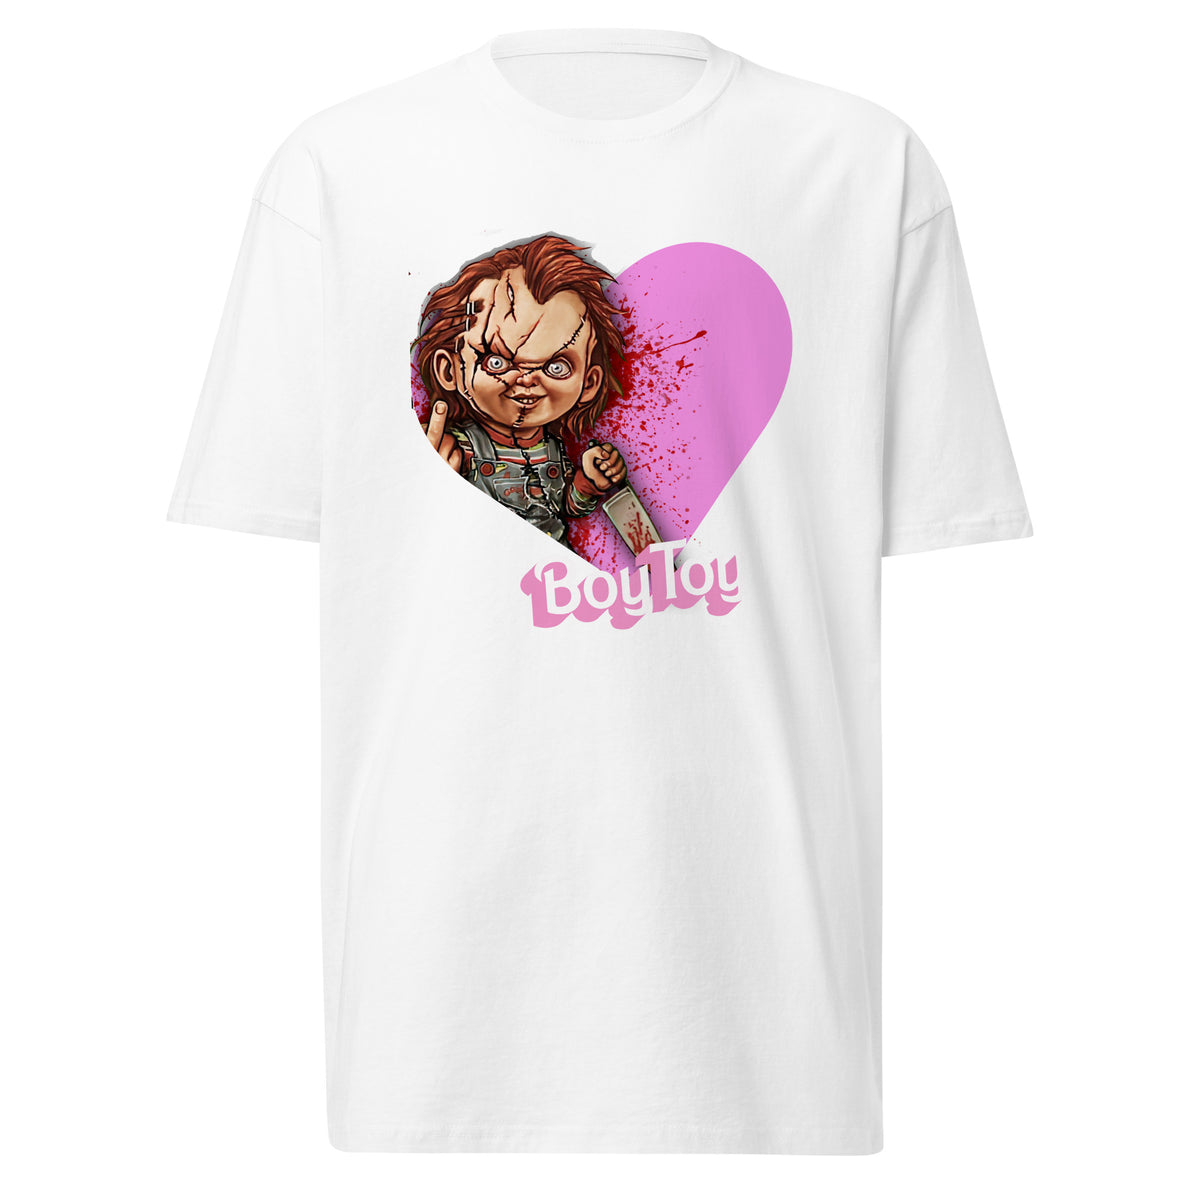 Men’s Boy Toy (Chucky) T-Shirt